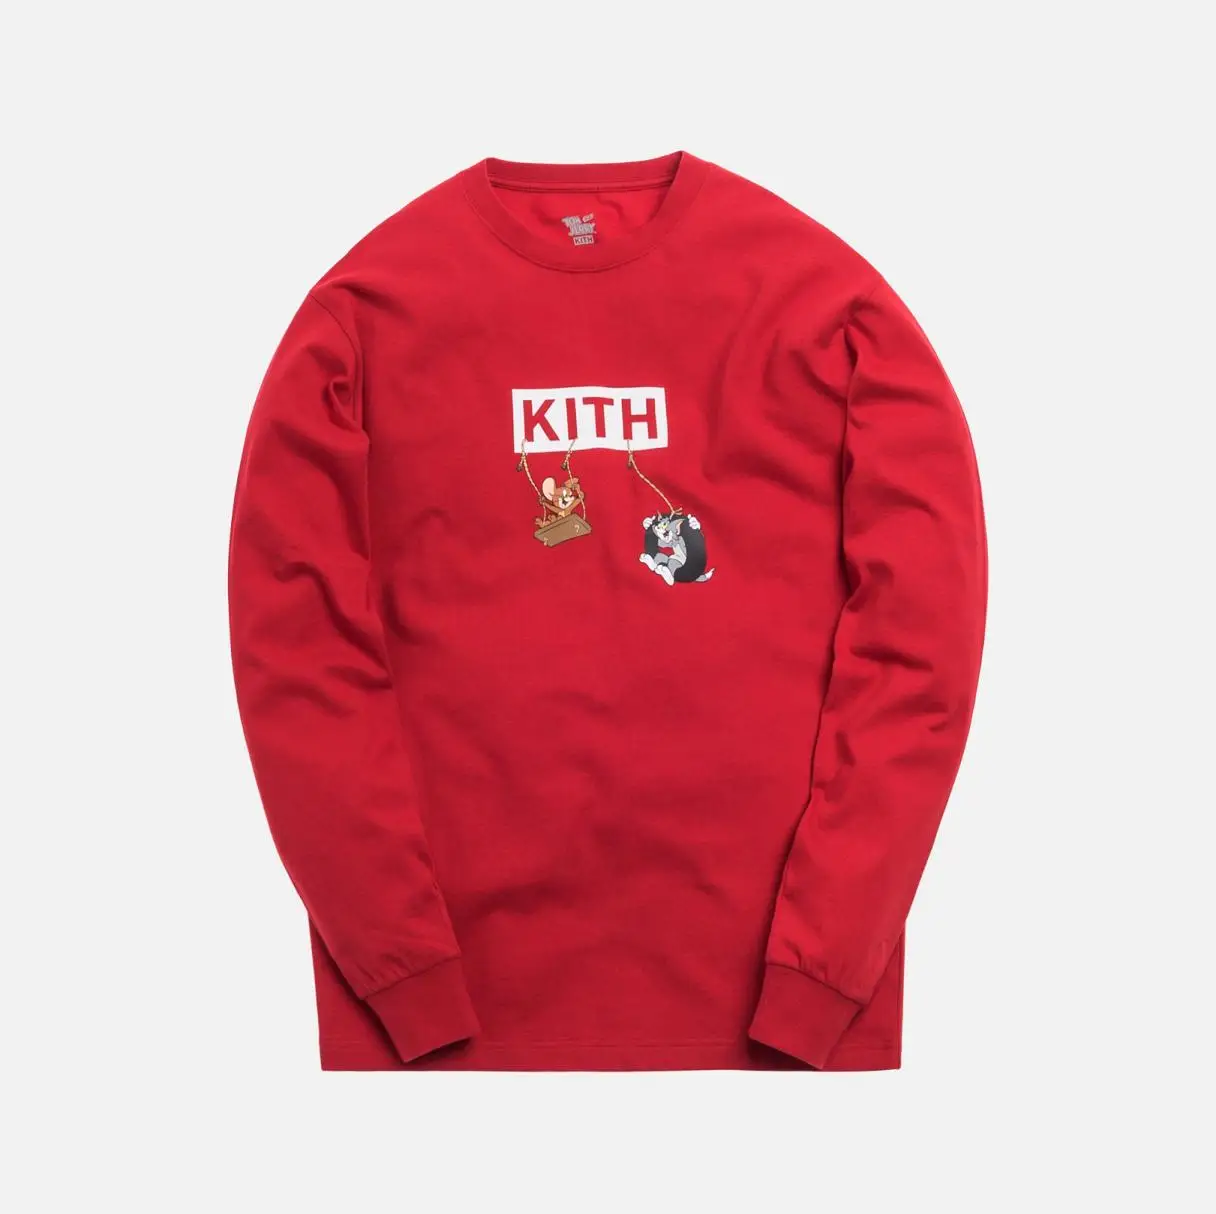 19ss Kith X Tom футболка 1:1 высокое качество Kith футболка с длинными рукавами хип-хоп Уличная Джастин Бибер КИТ футболка s для мужчин и женщин - Цвет: red1